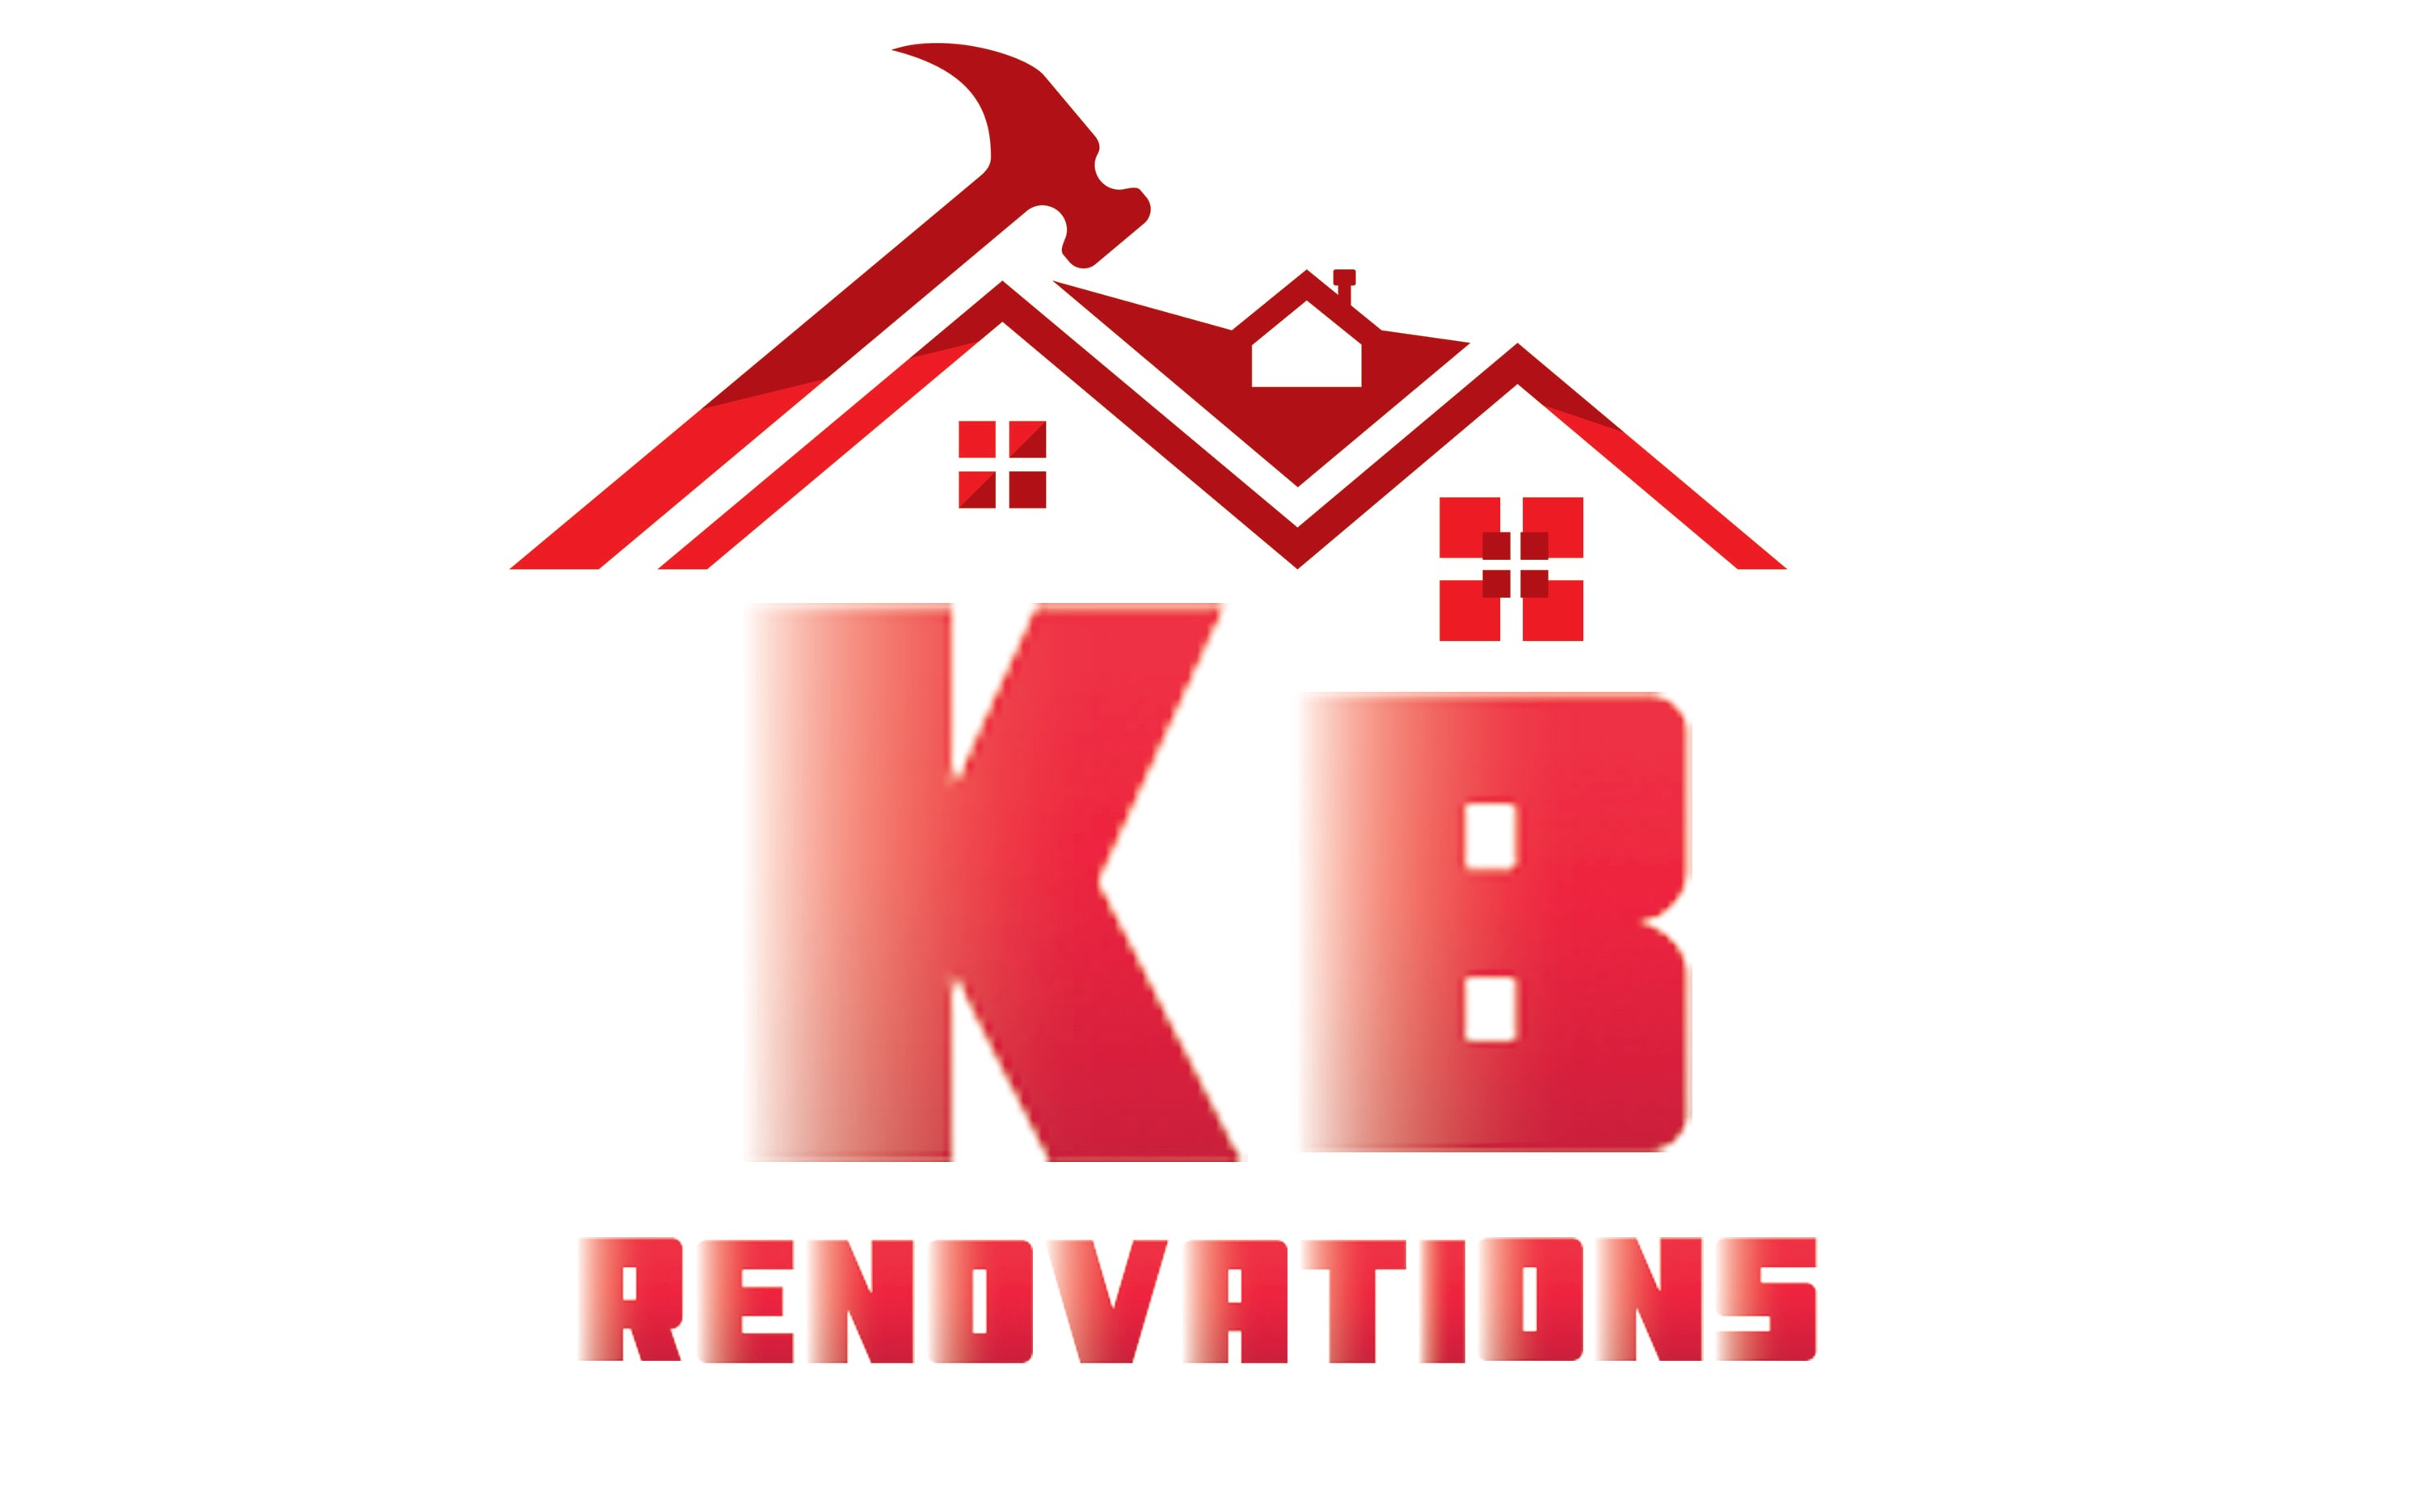 KB Renovations